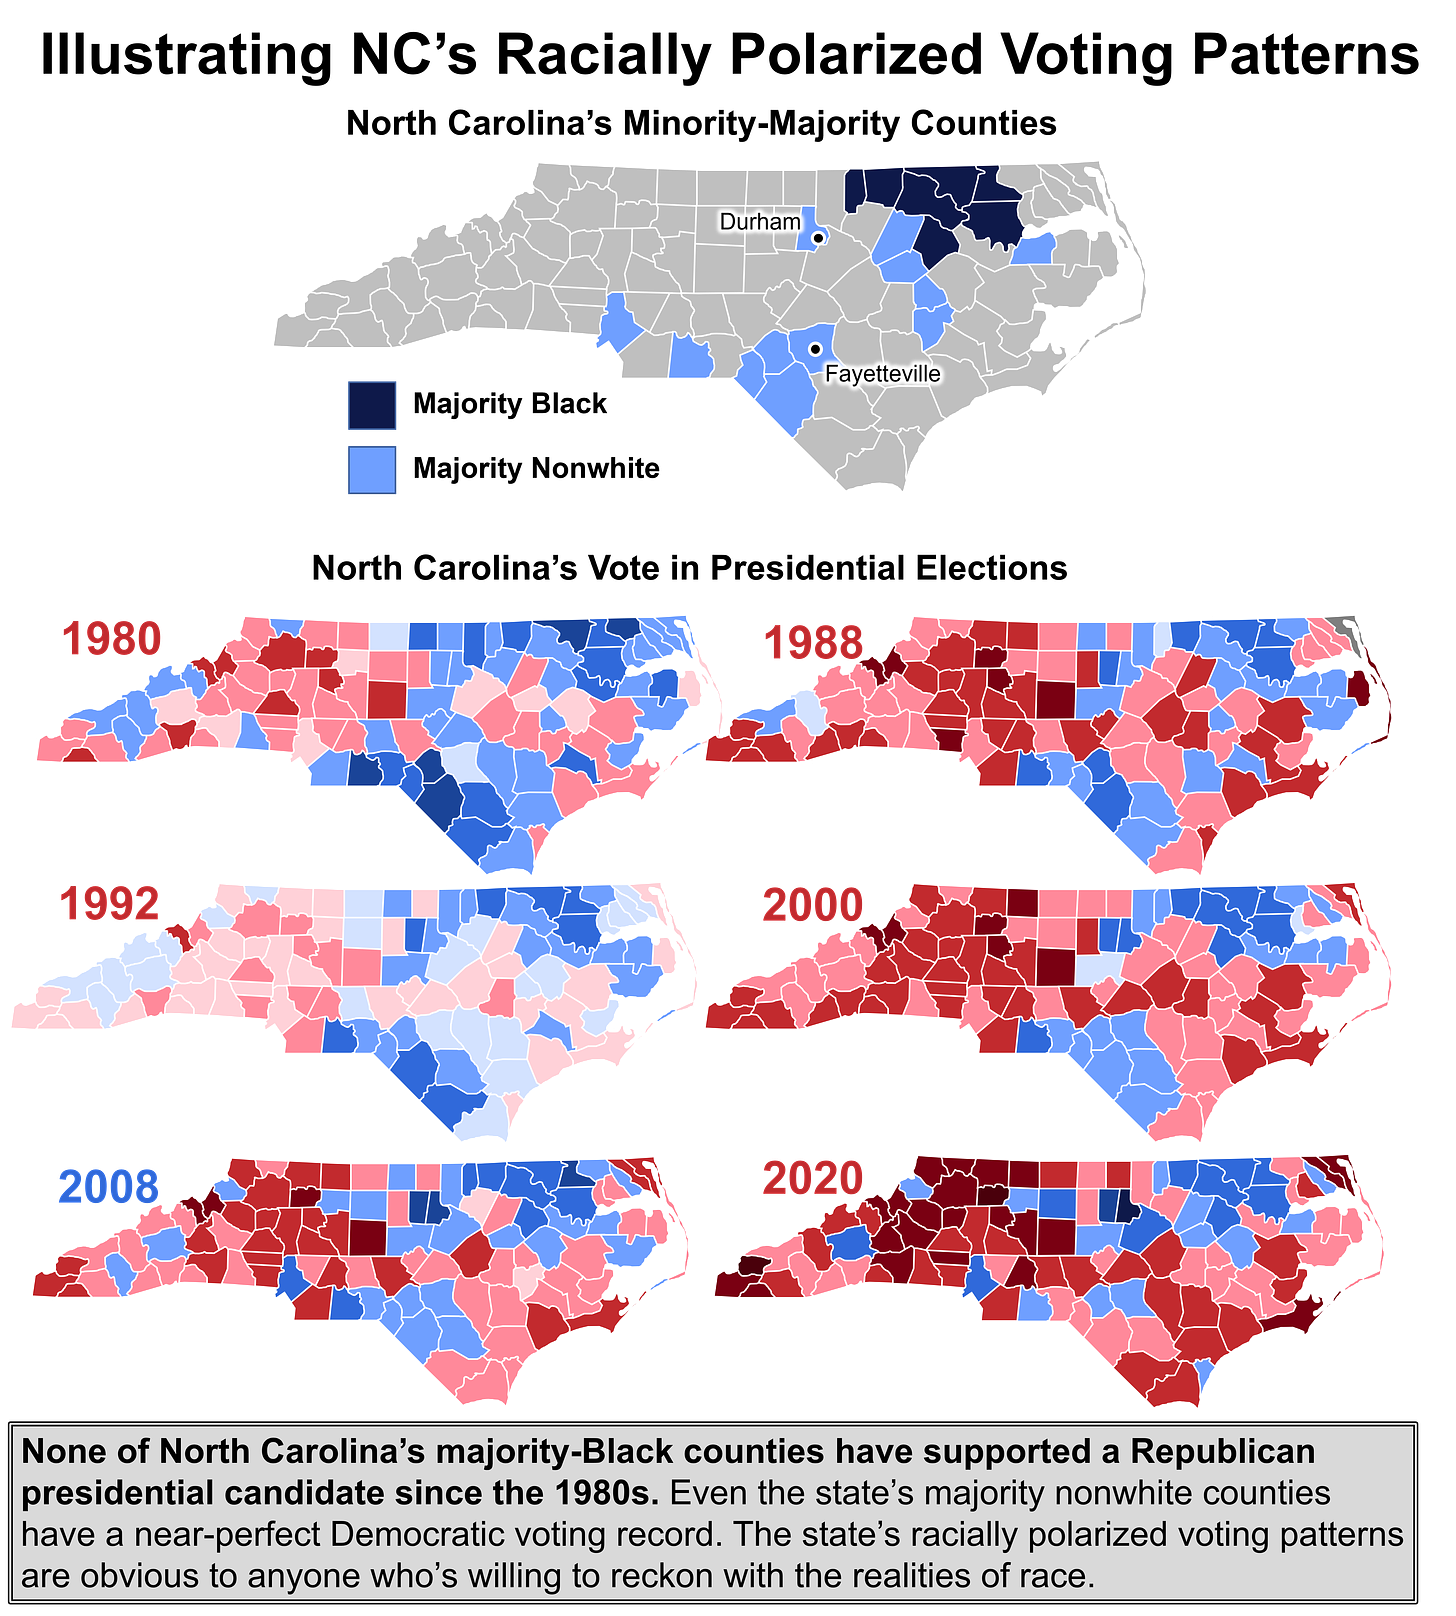 Illustrating North Carolina's Racially Polarized Voting Patterns